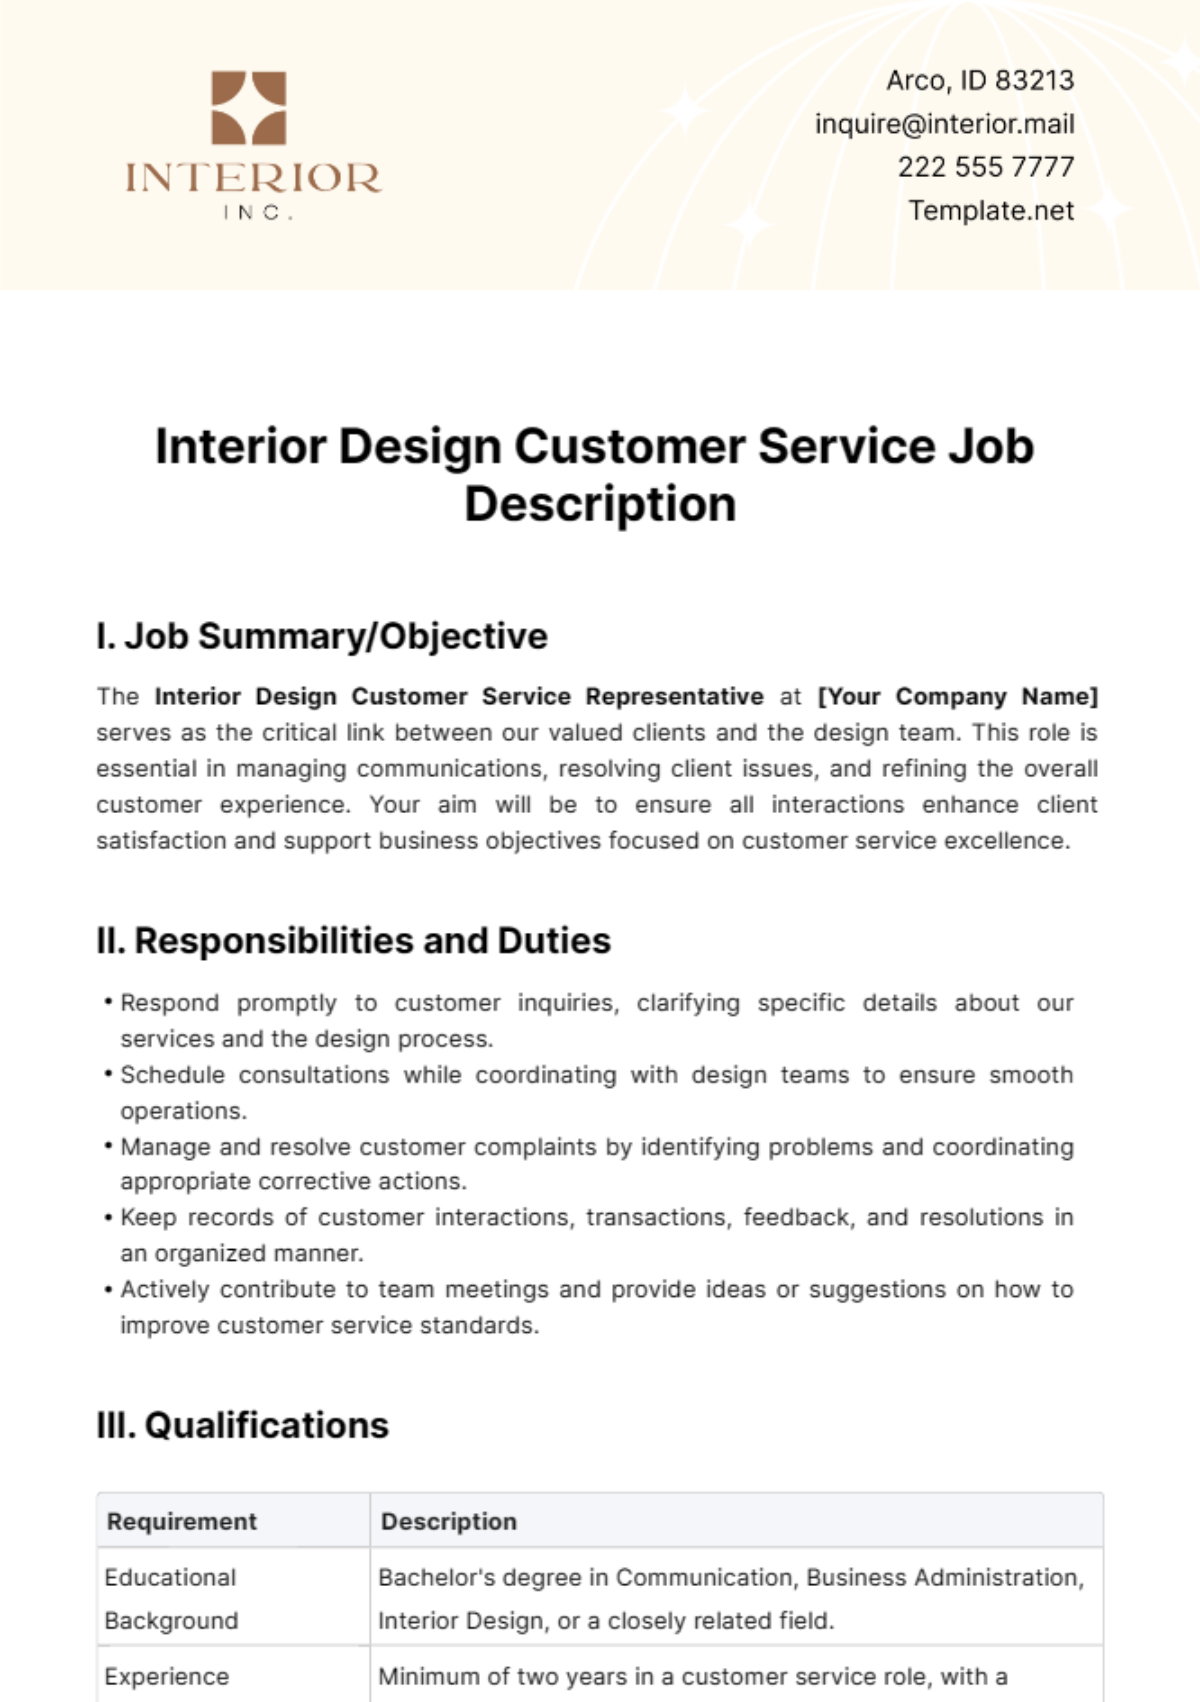 Interior Design Customer Service Job Description Template